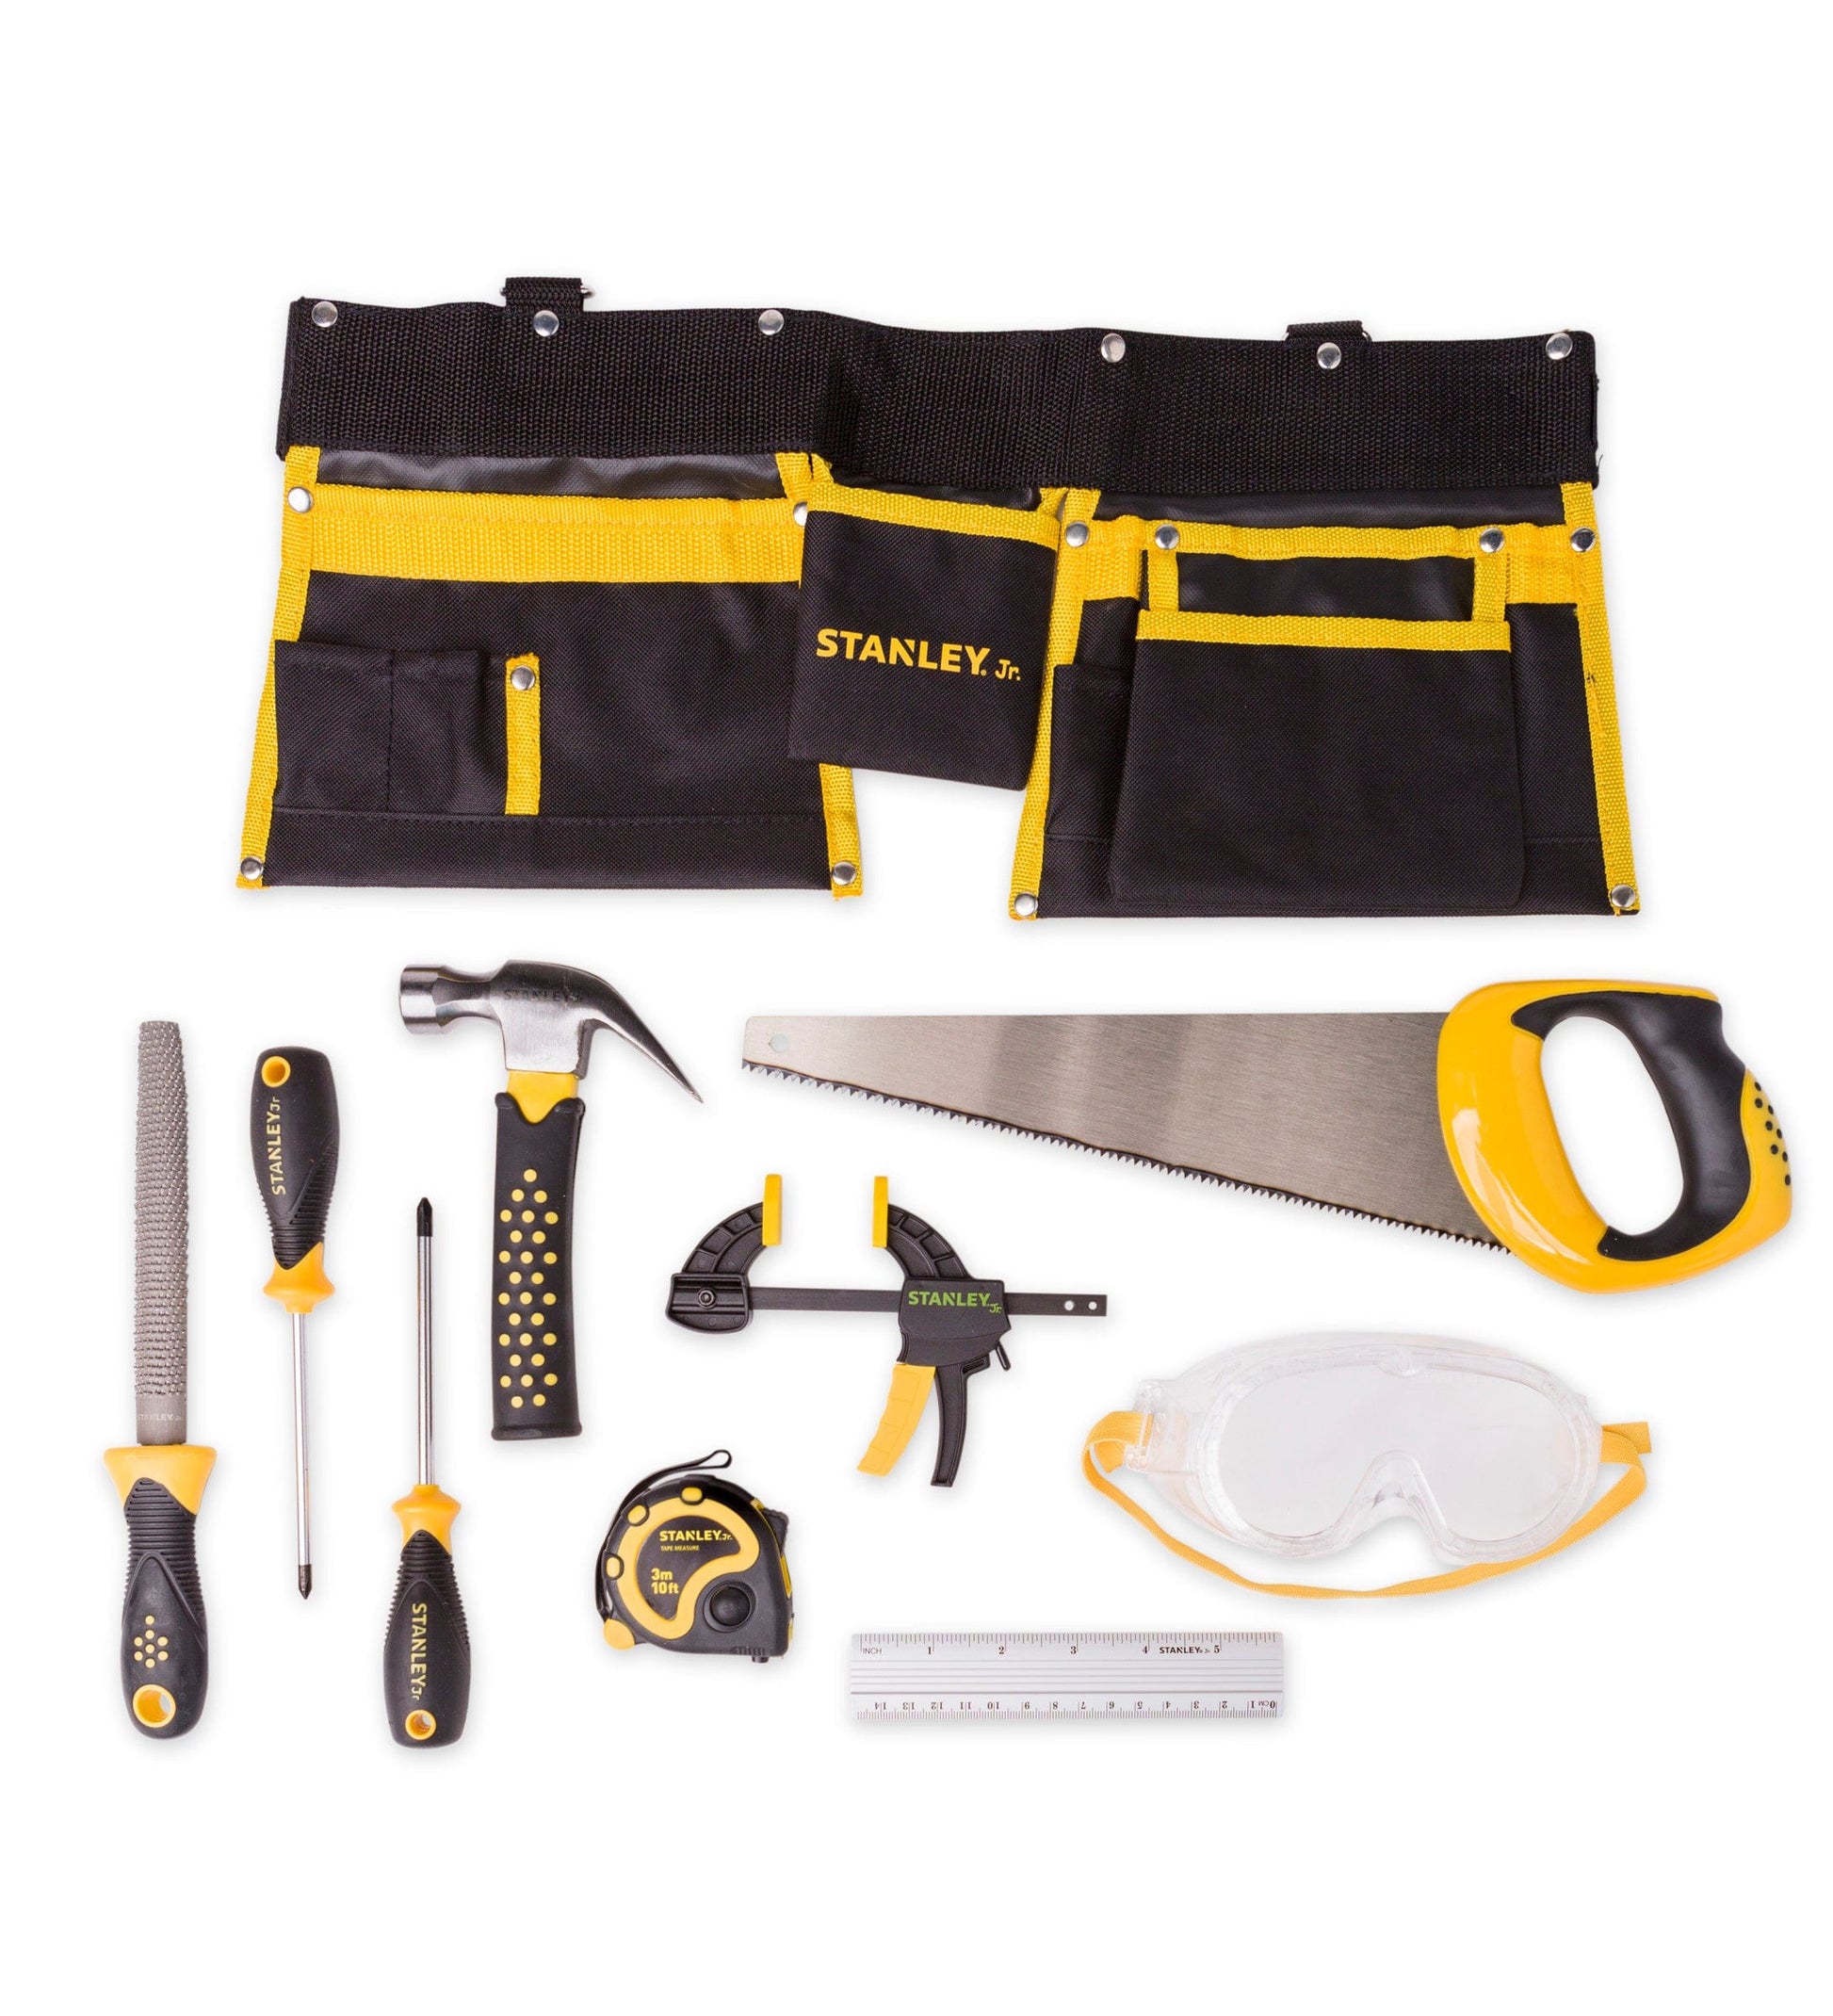 Stanley Jr. 10-Piece Belt and Ergonomic Real Working Tool Set